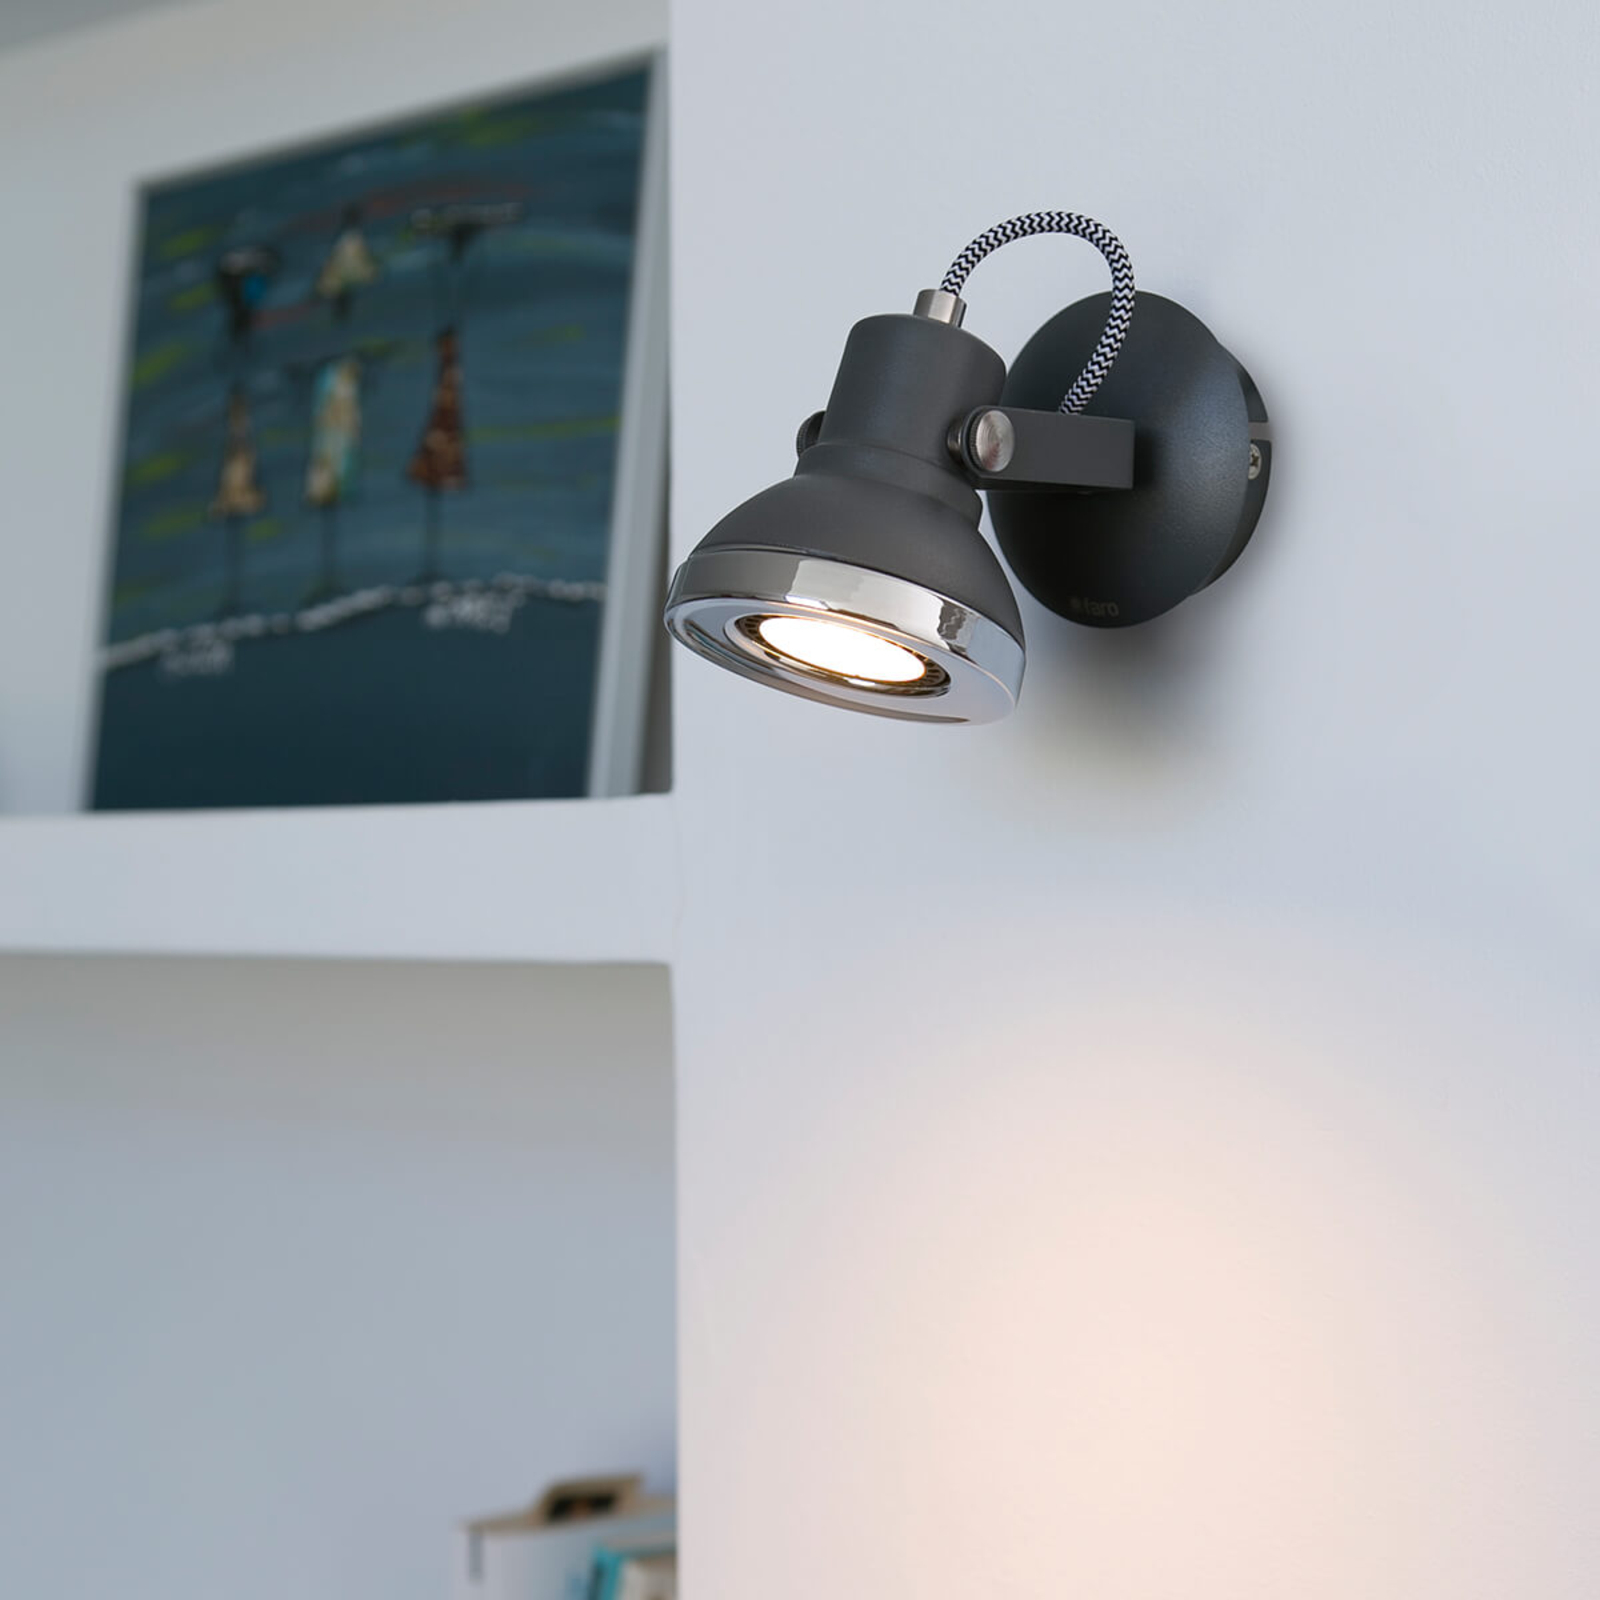 Ring - one-bulb LED wall spotlight in dark grey